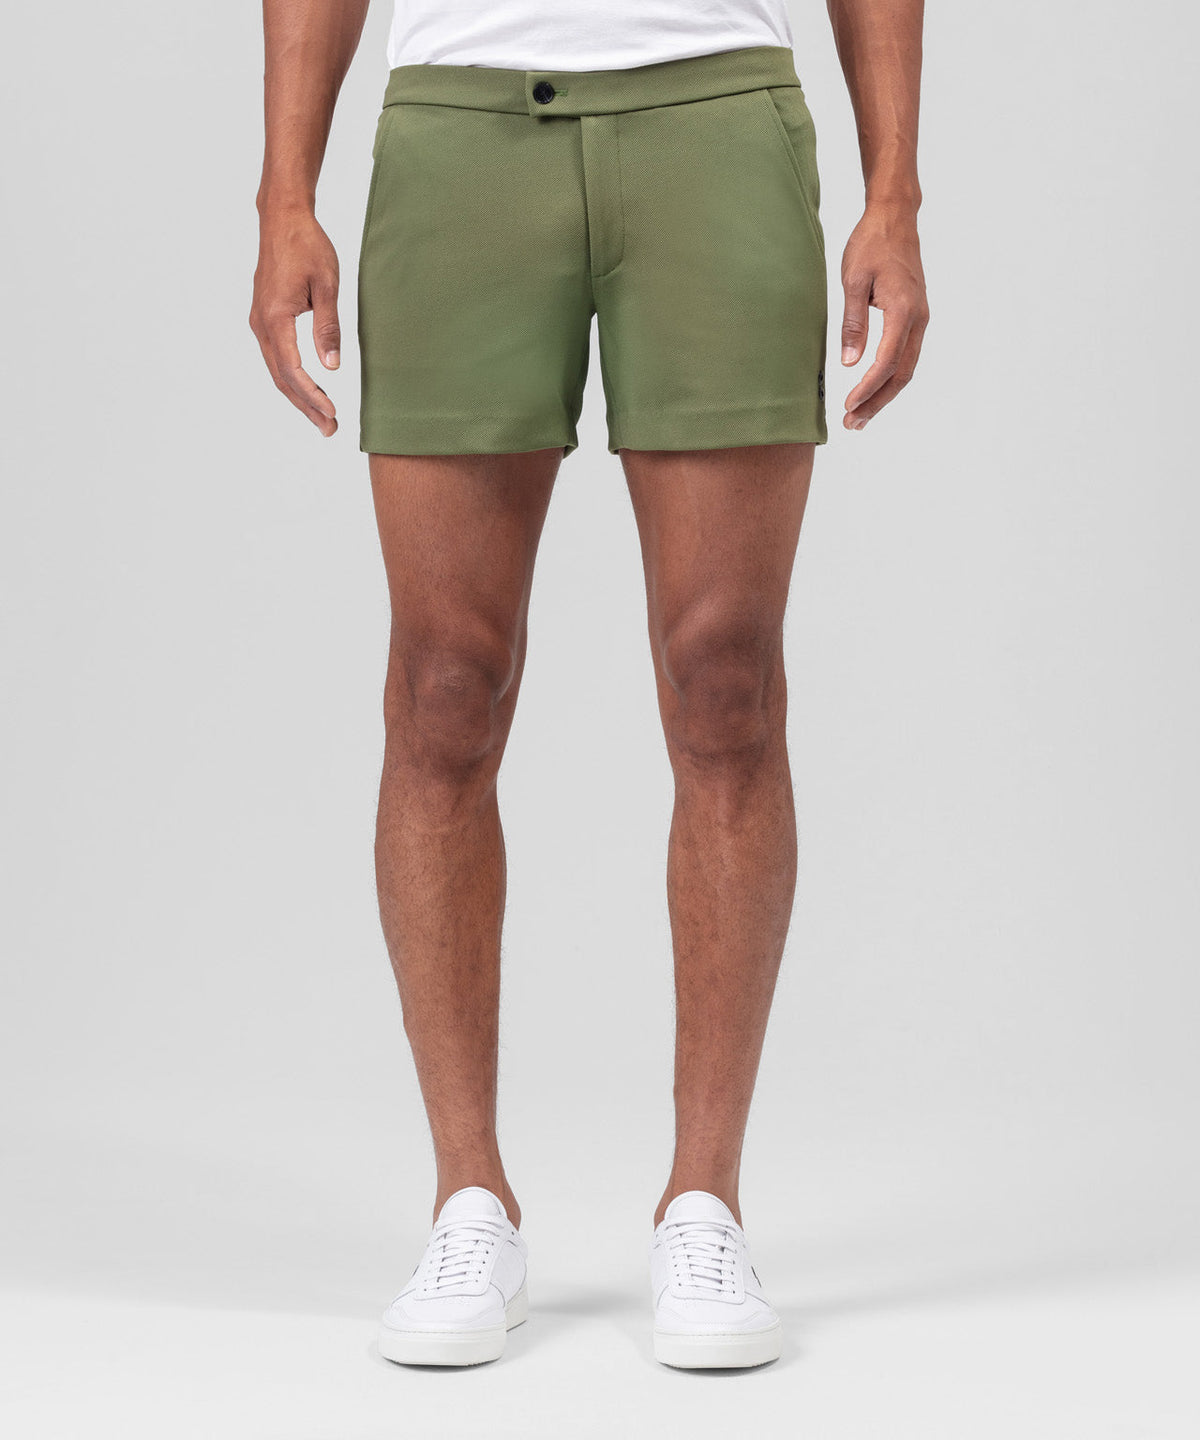 Tennis Shorts: Green